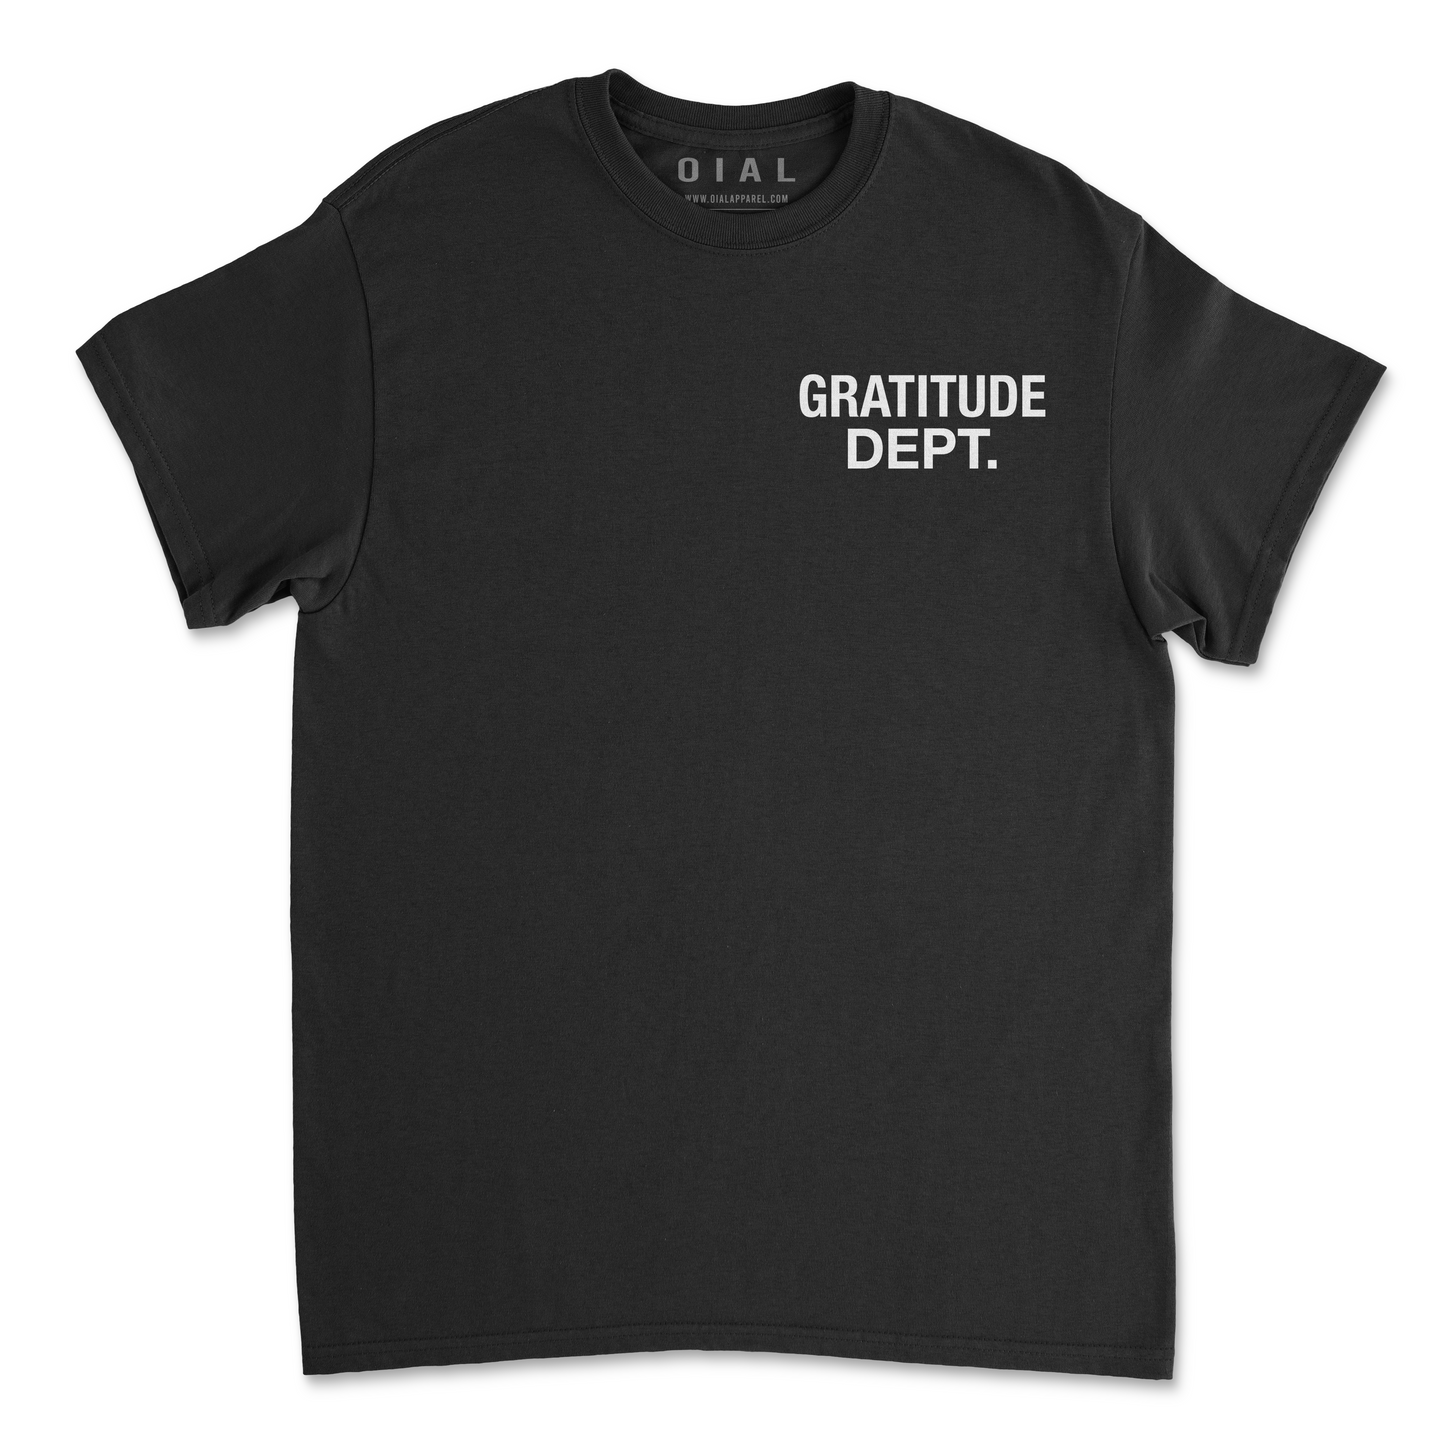 Gratitude Dept. Shirt - Black